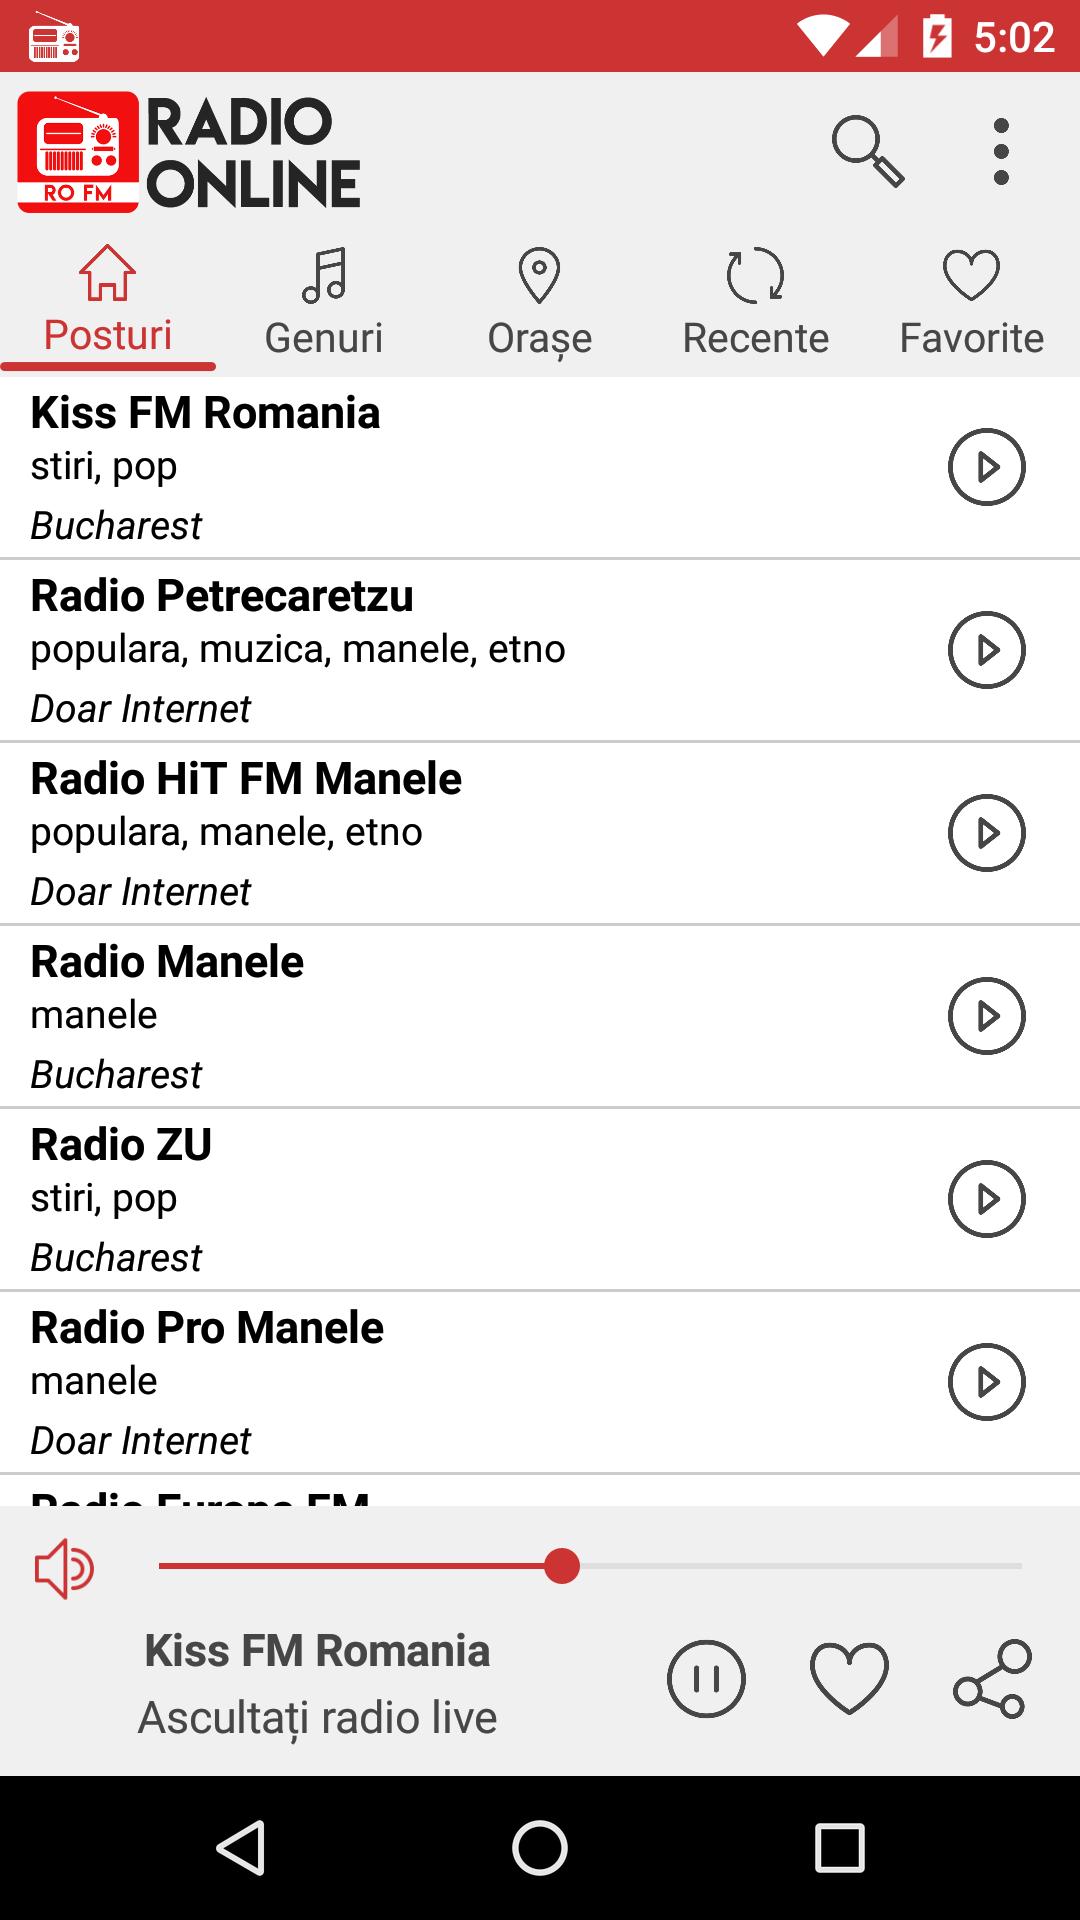 Radio Online Romania Listen To Live Fm Radio For Android Apk